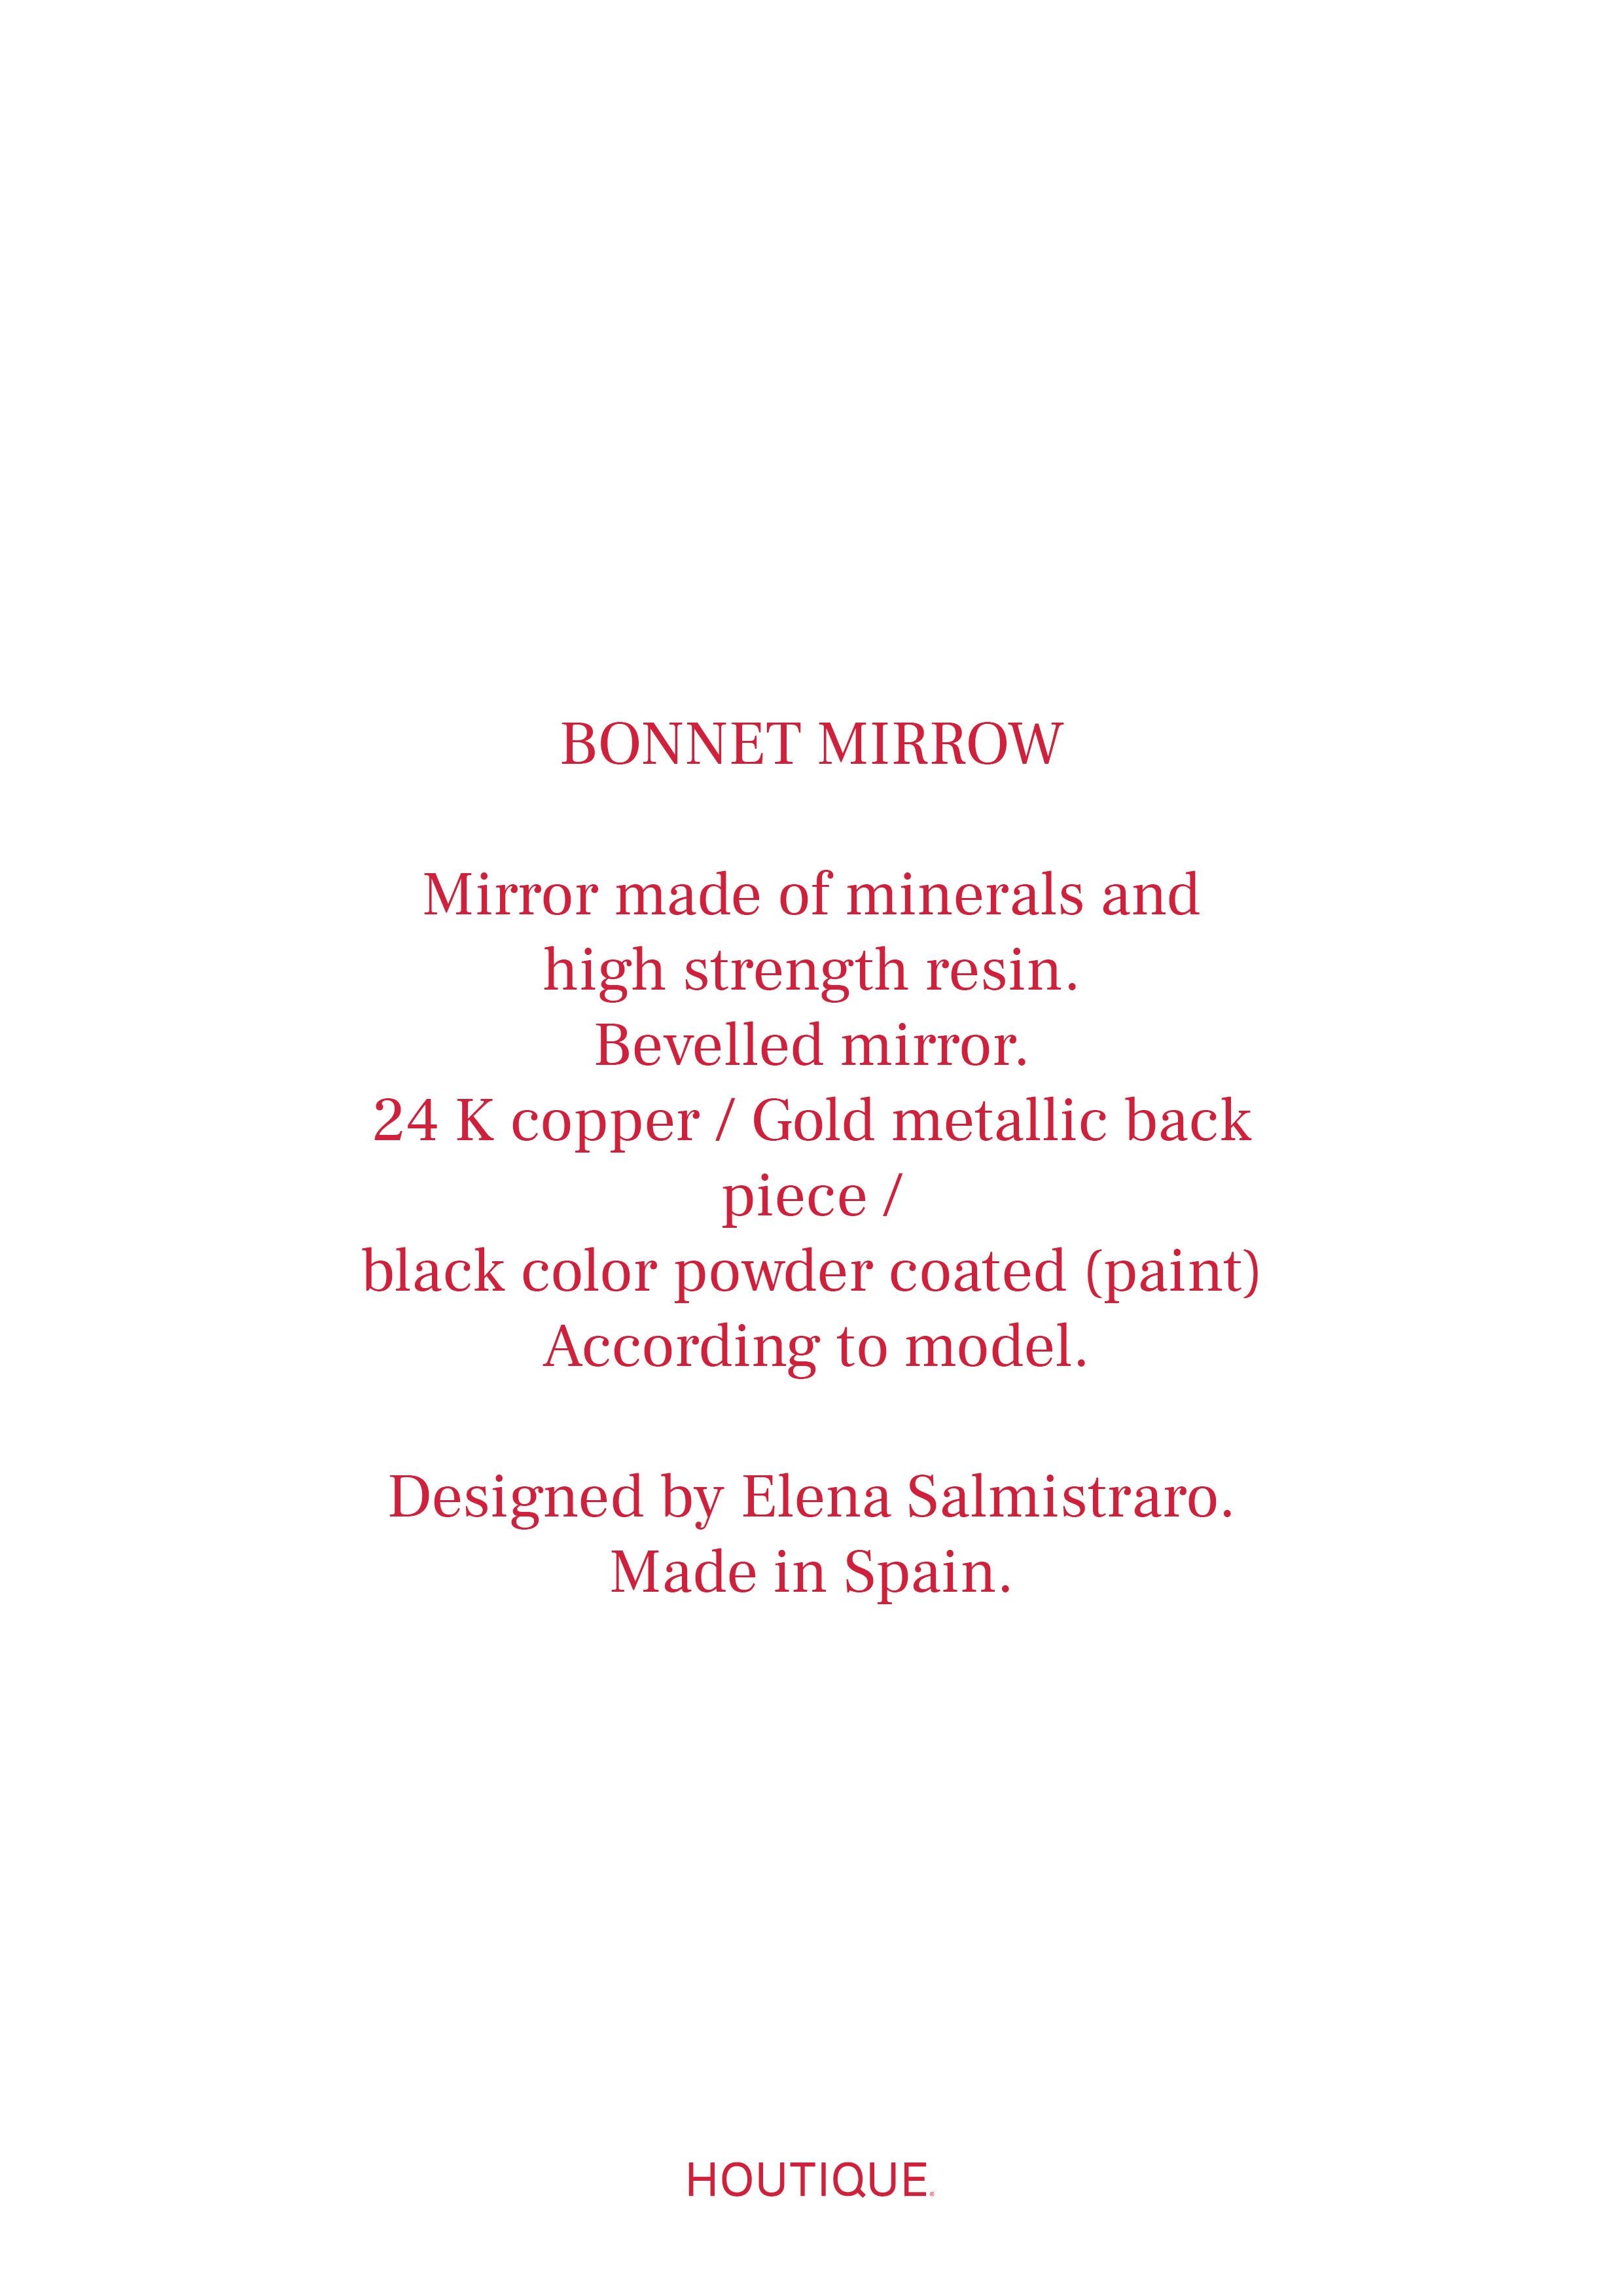 Spanish Bonnet Mirror by Houtique, Green